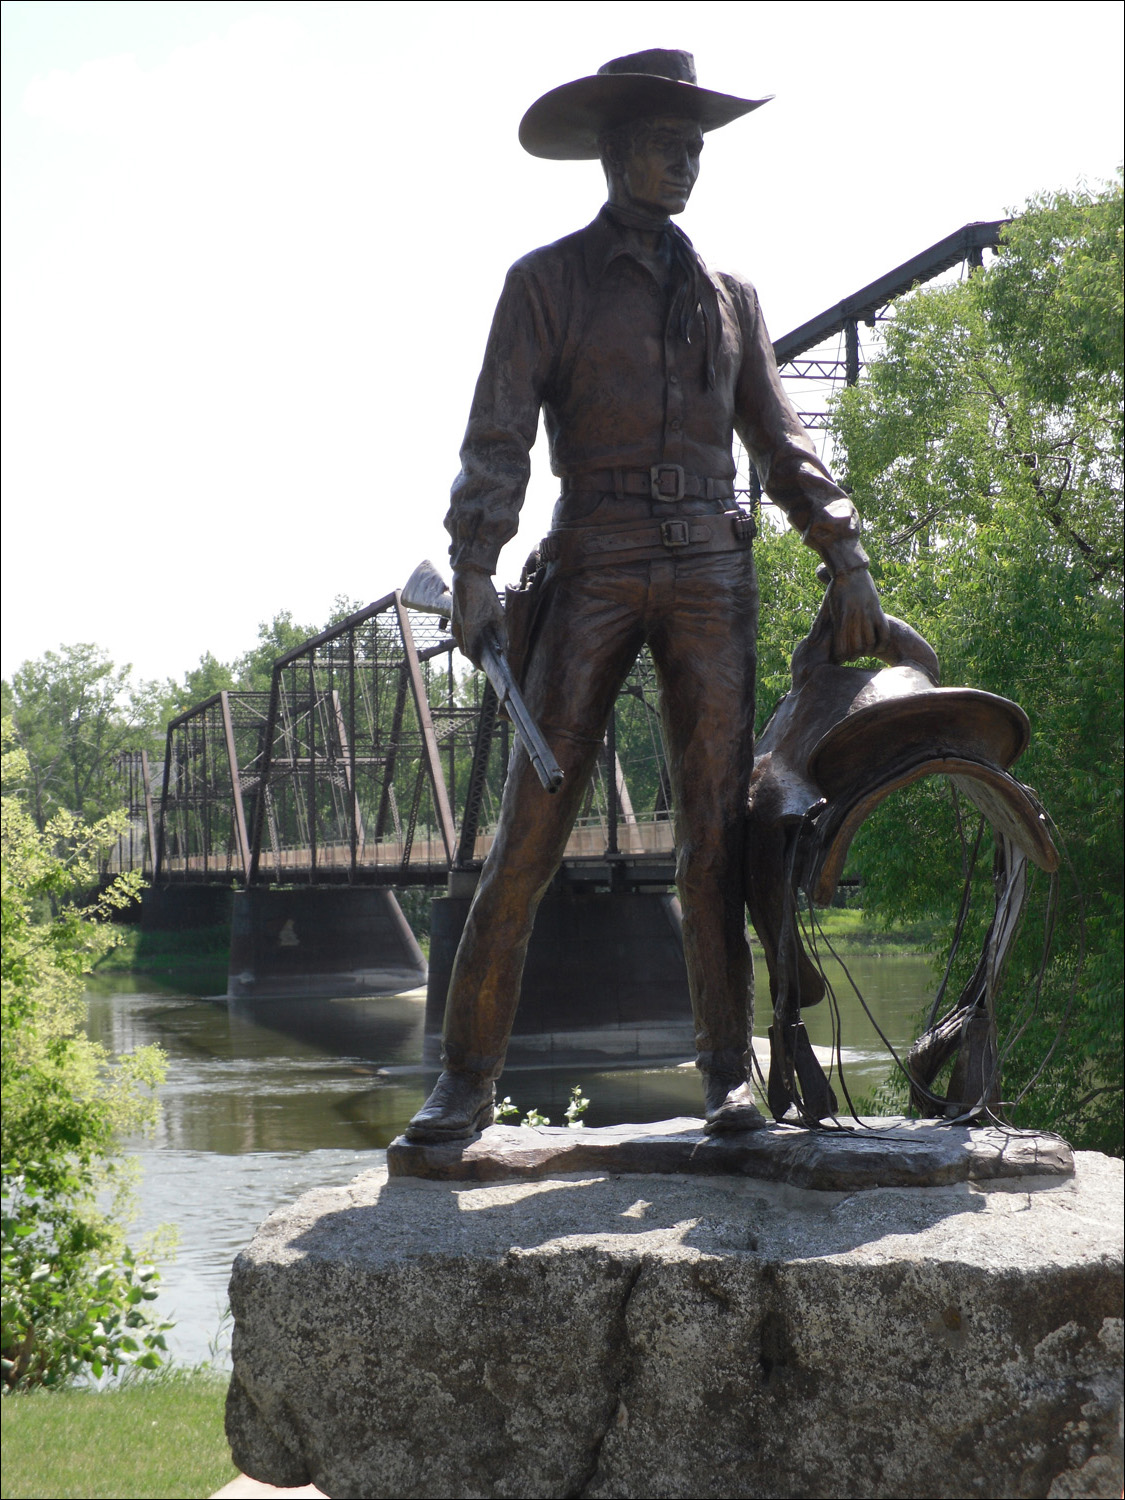 Fort Benton, MT- Statue commemorating the era of the open range cowboy.